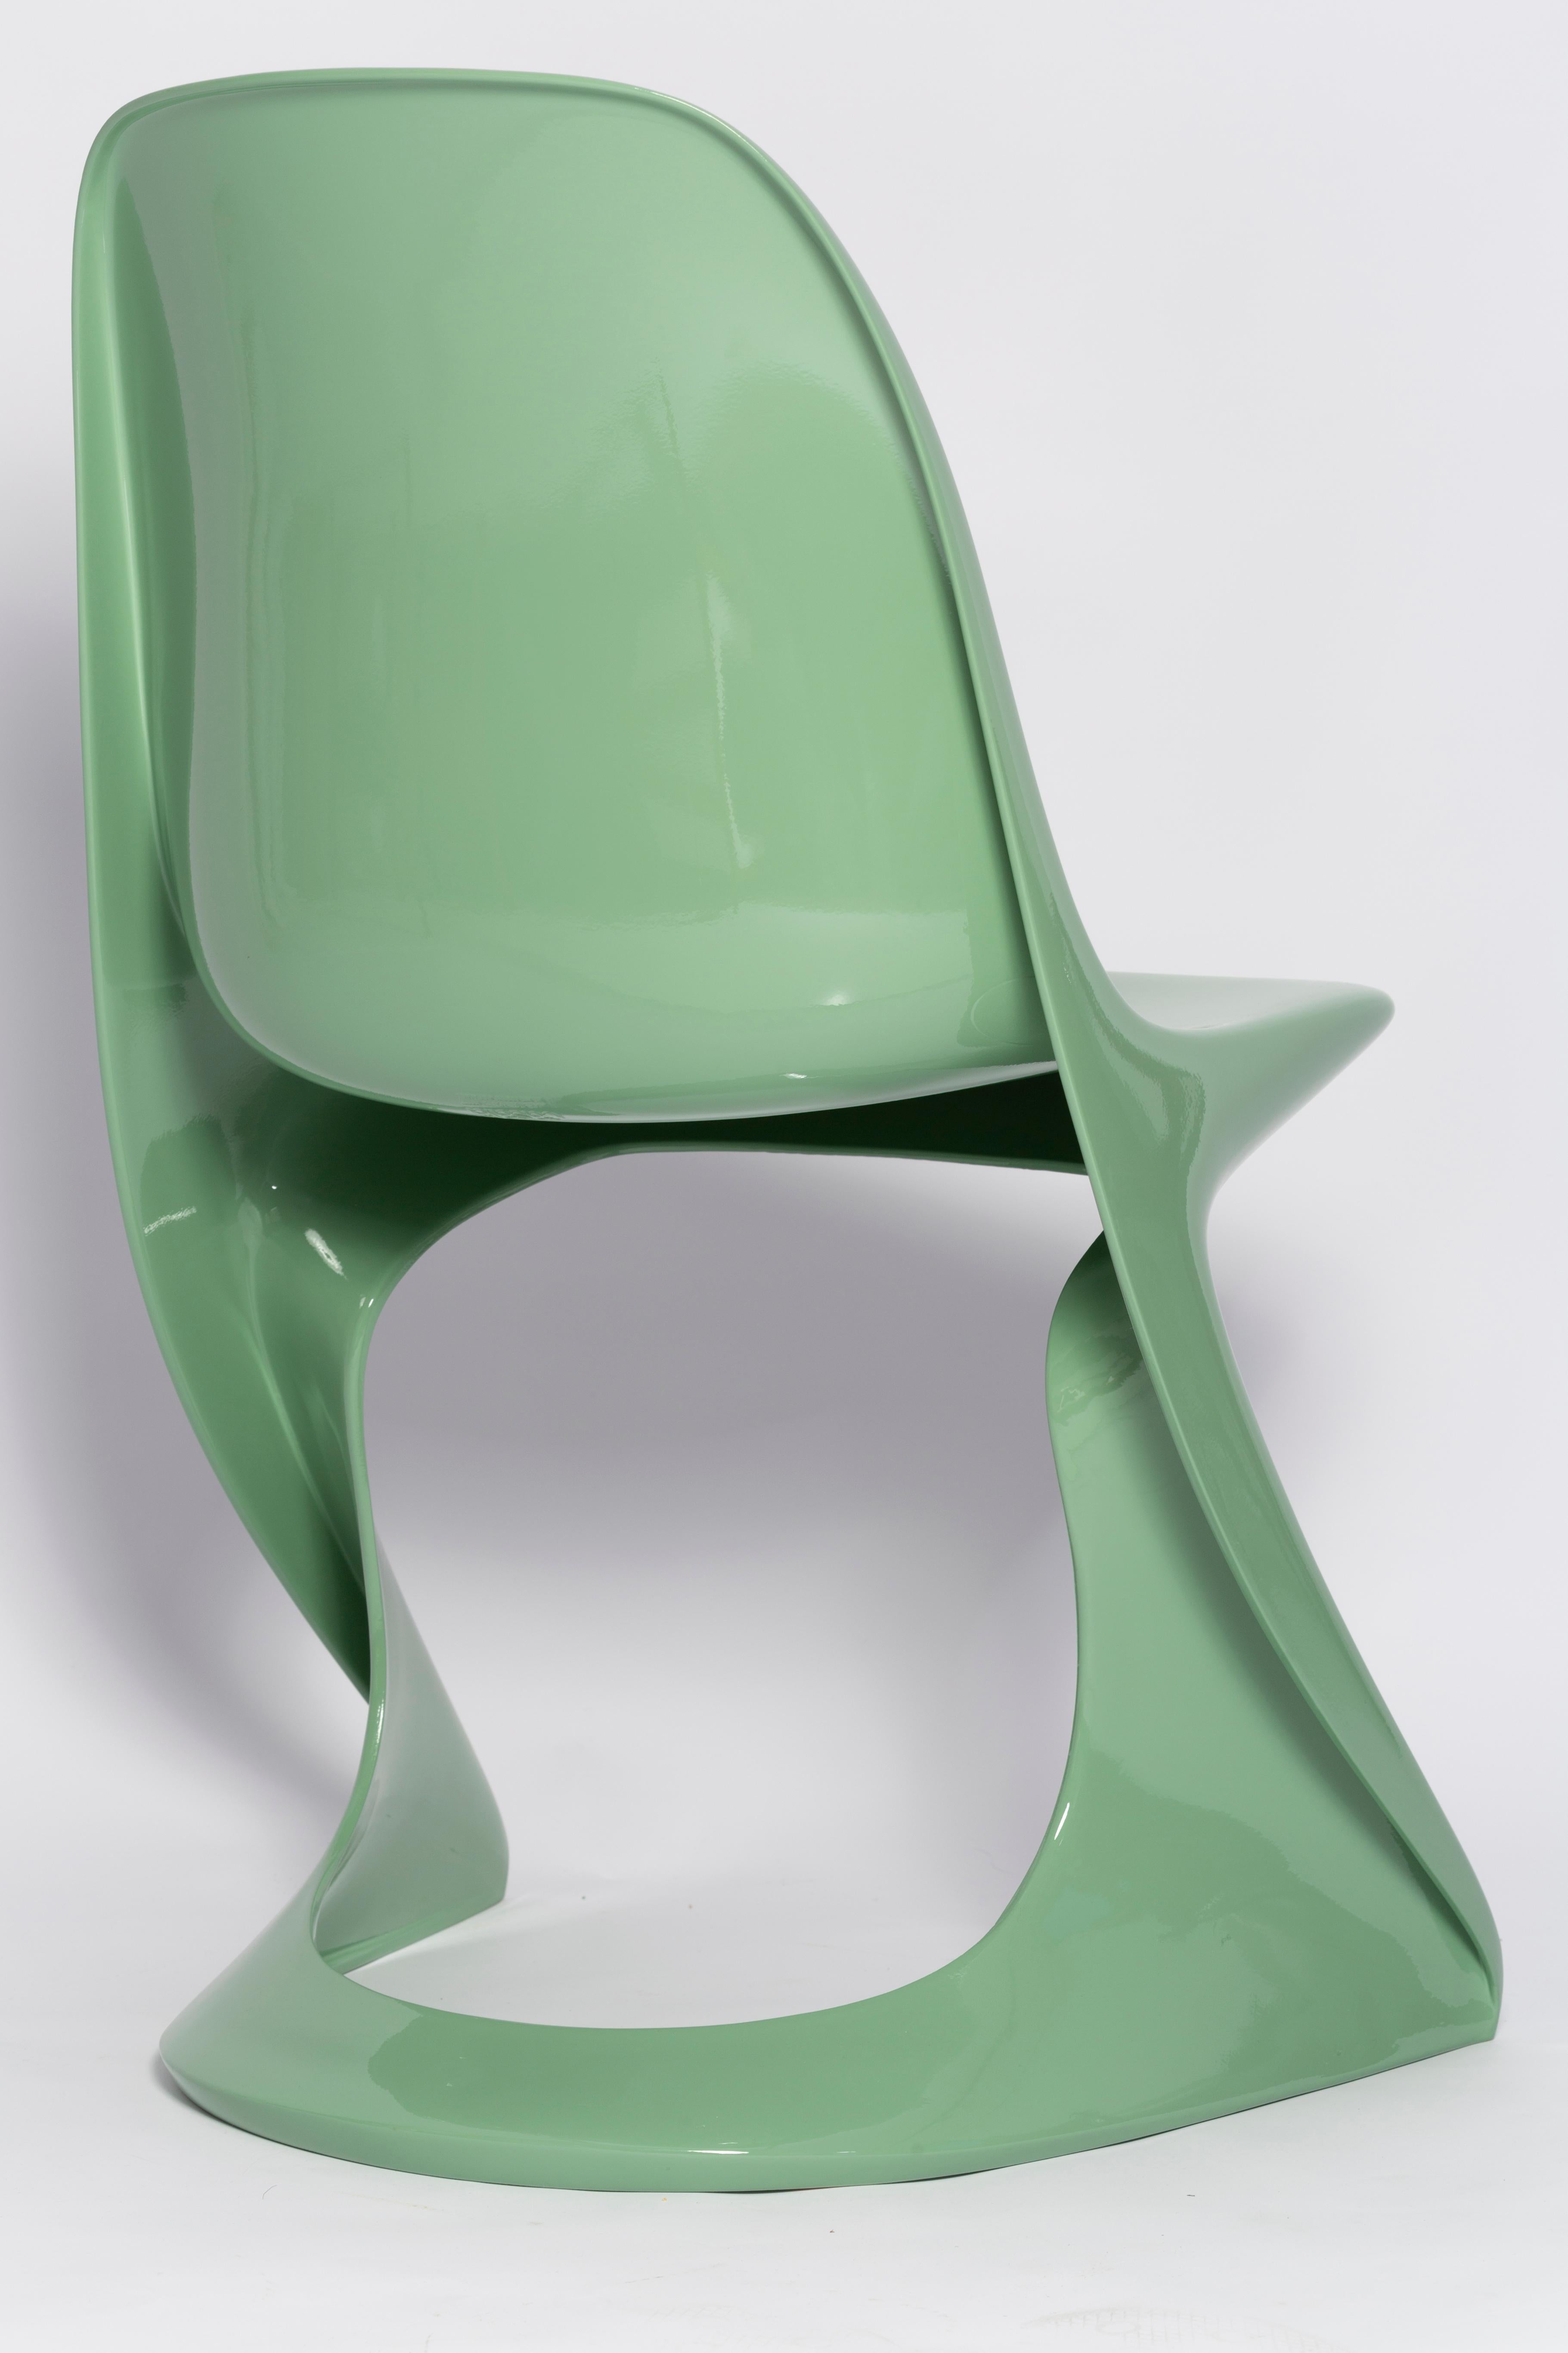 20th Century Mid-Century Casalino Chair in Jade Green, Alexander Begge, Casala, Germany 1970s For Sale